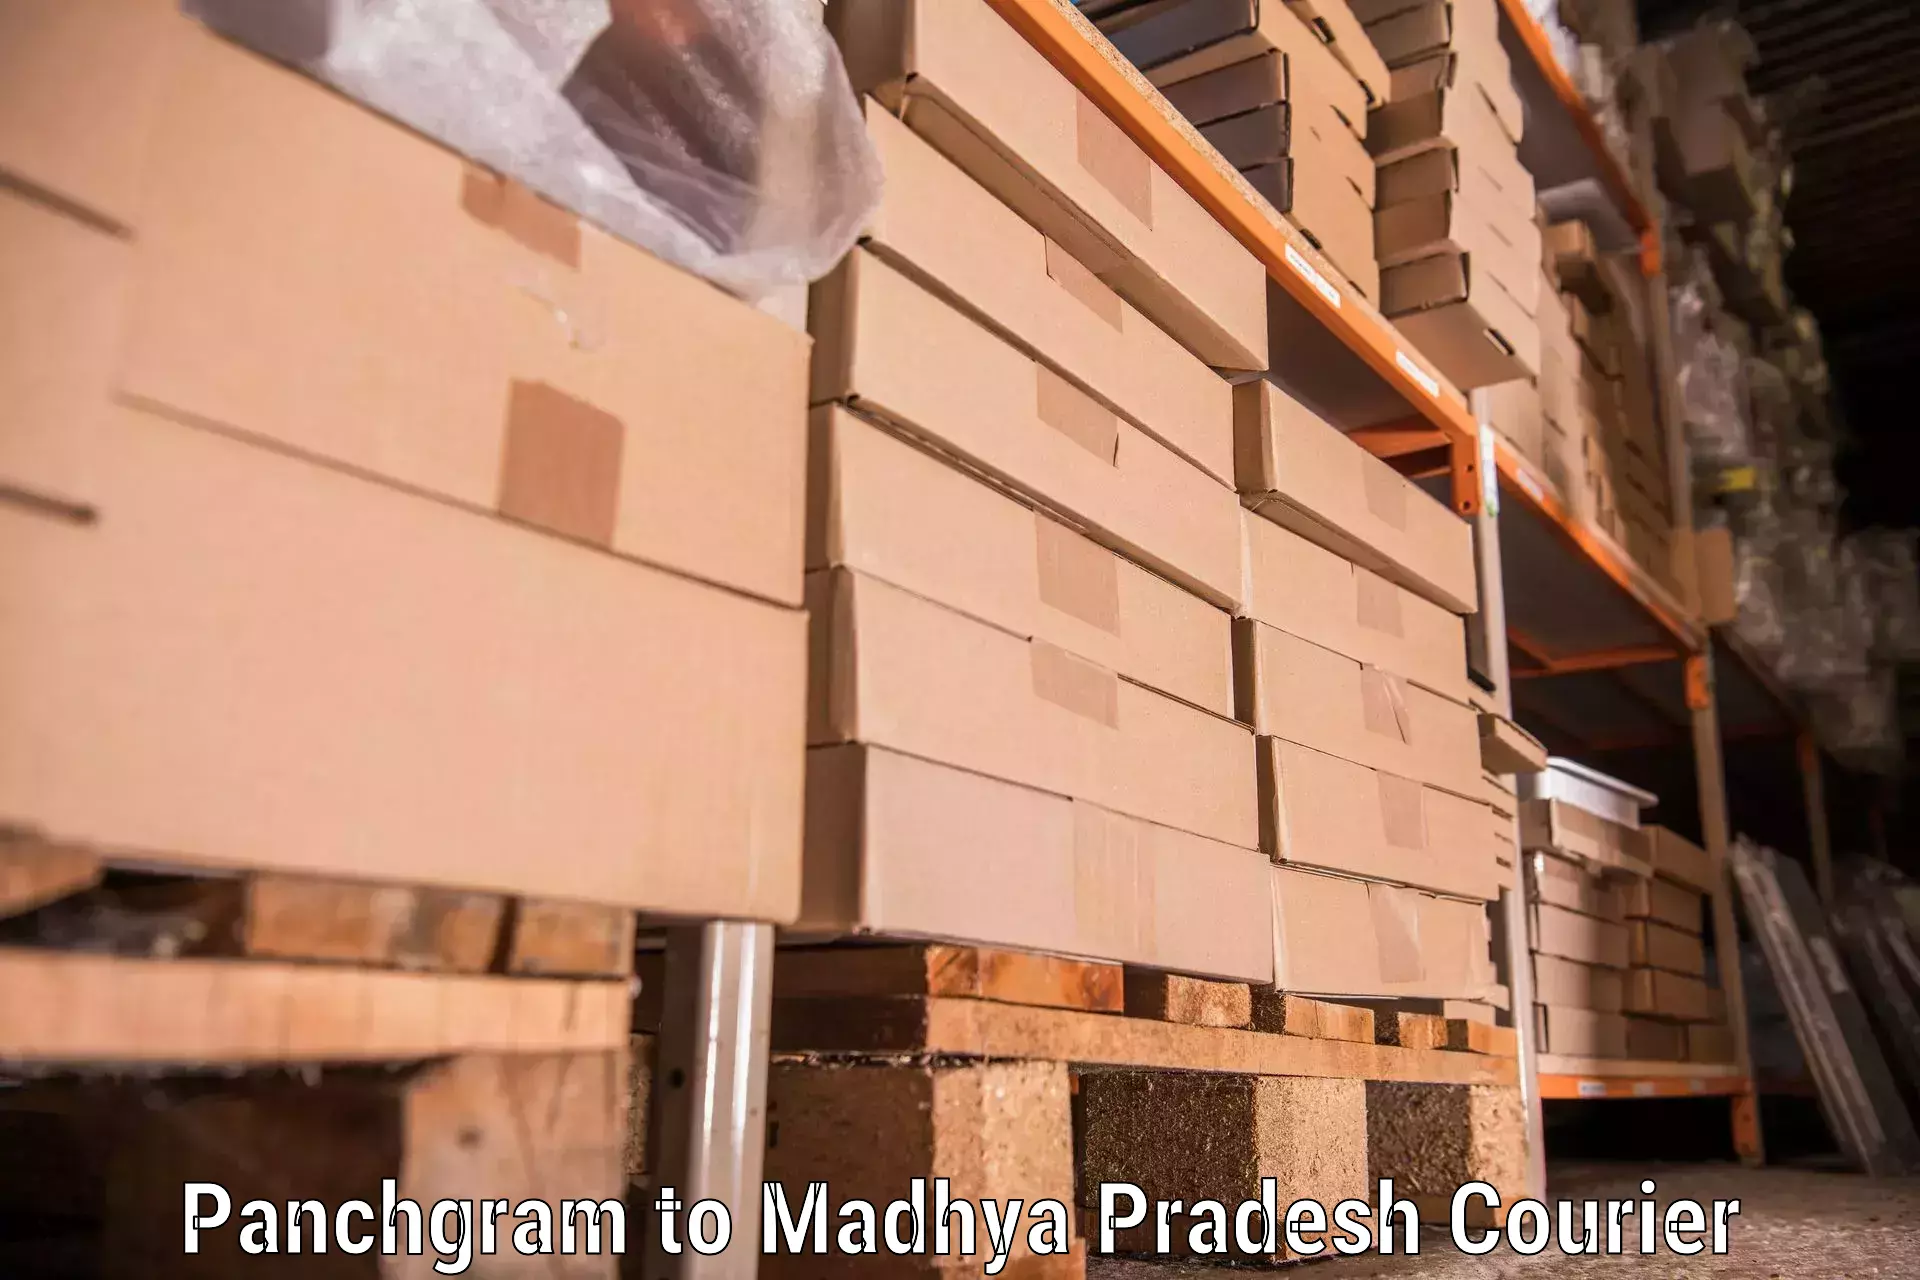 Quality moving company Panchgram to Raghogarh